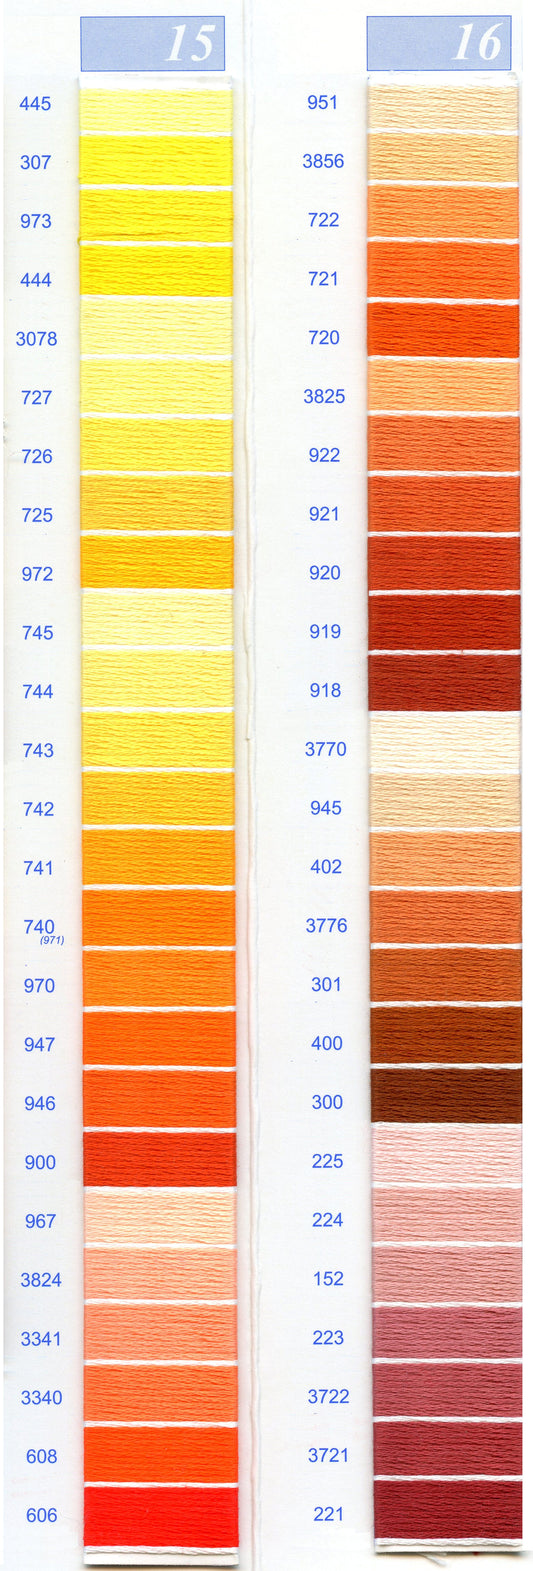 DMC Embroidery Floss Chart - Columns 15 & 16